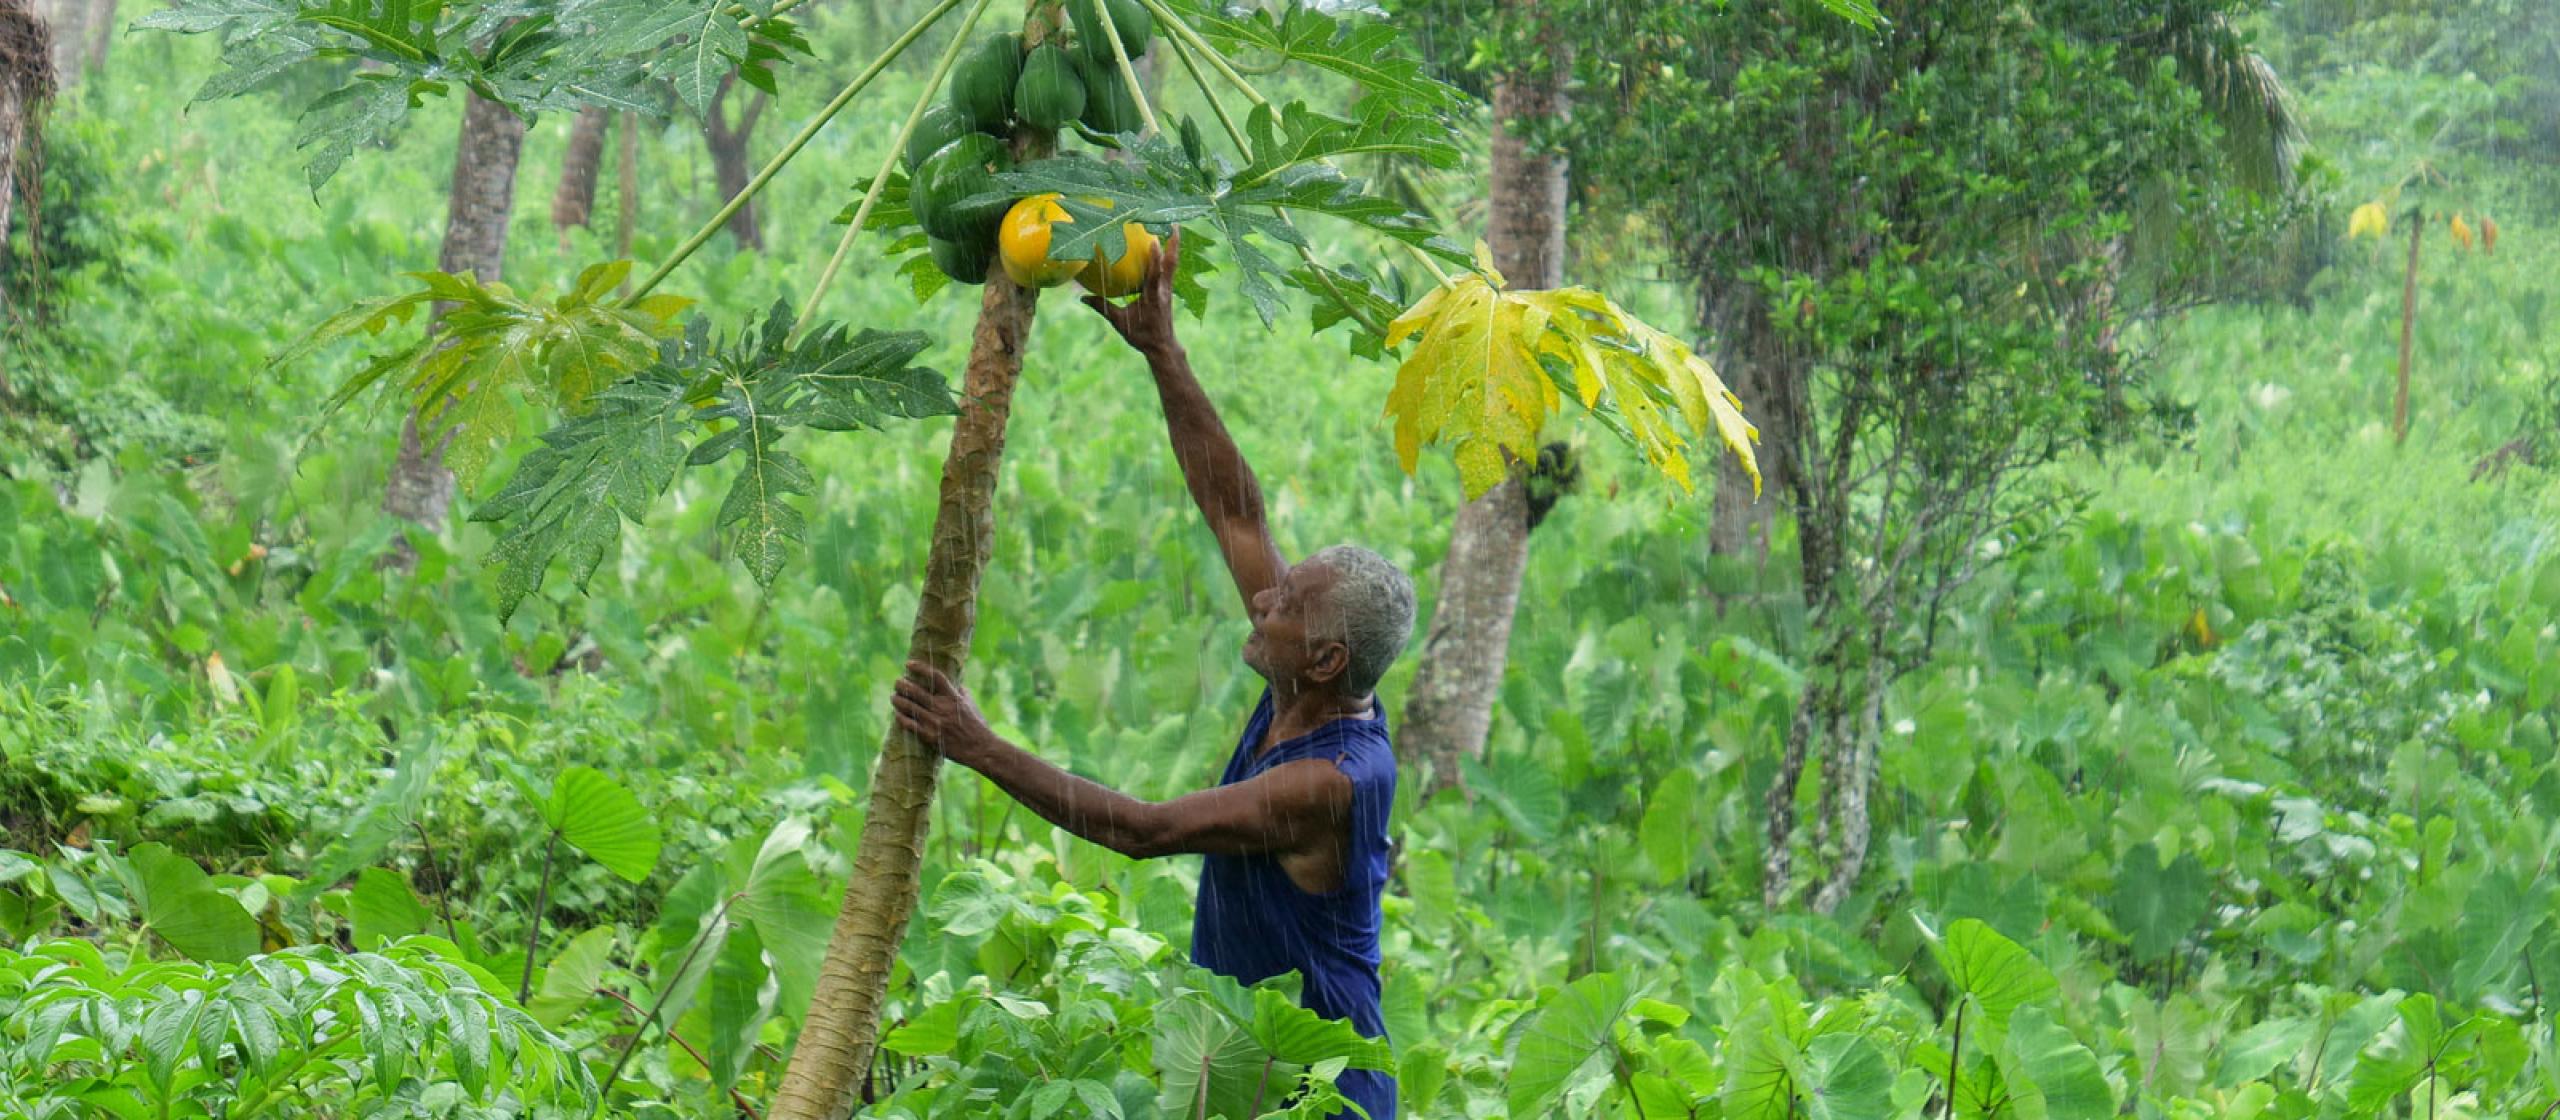 man harvesting fruit from tree